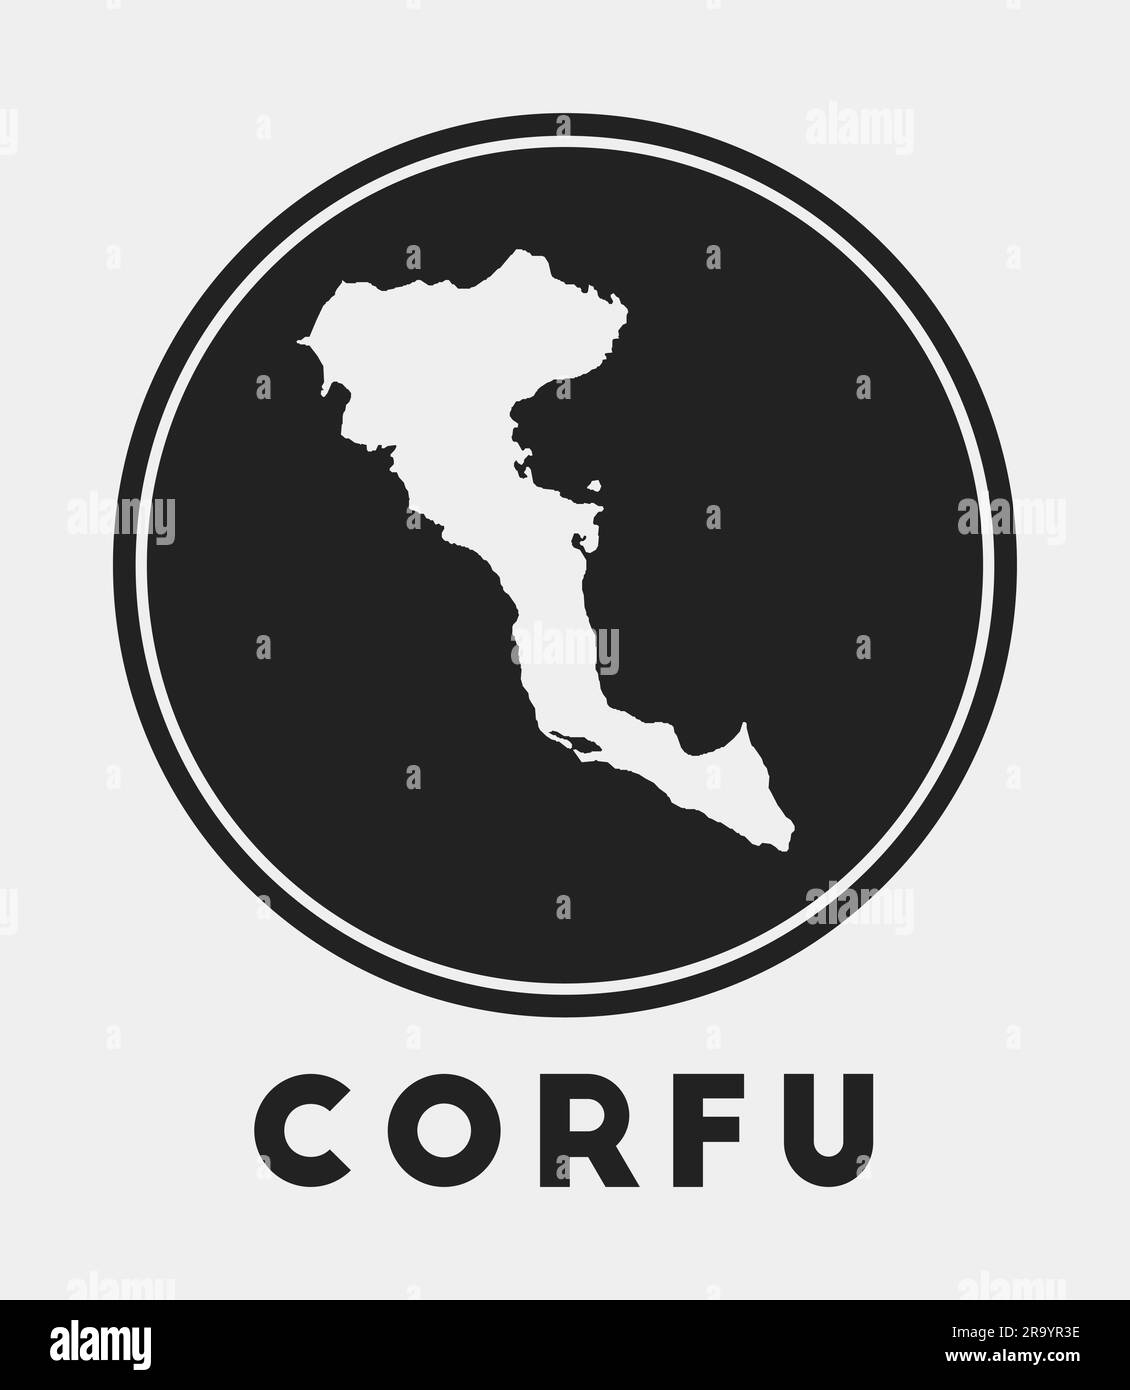 Corfu icon. Round logo with island map and title. Stylish Corfu badge ...